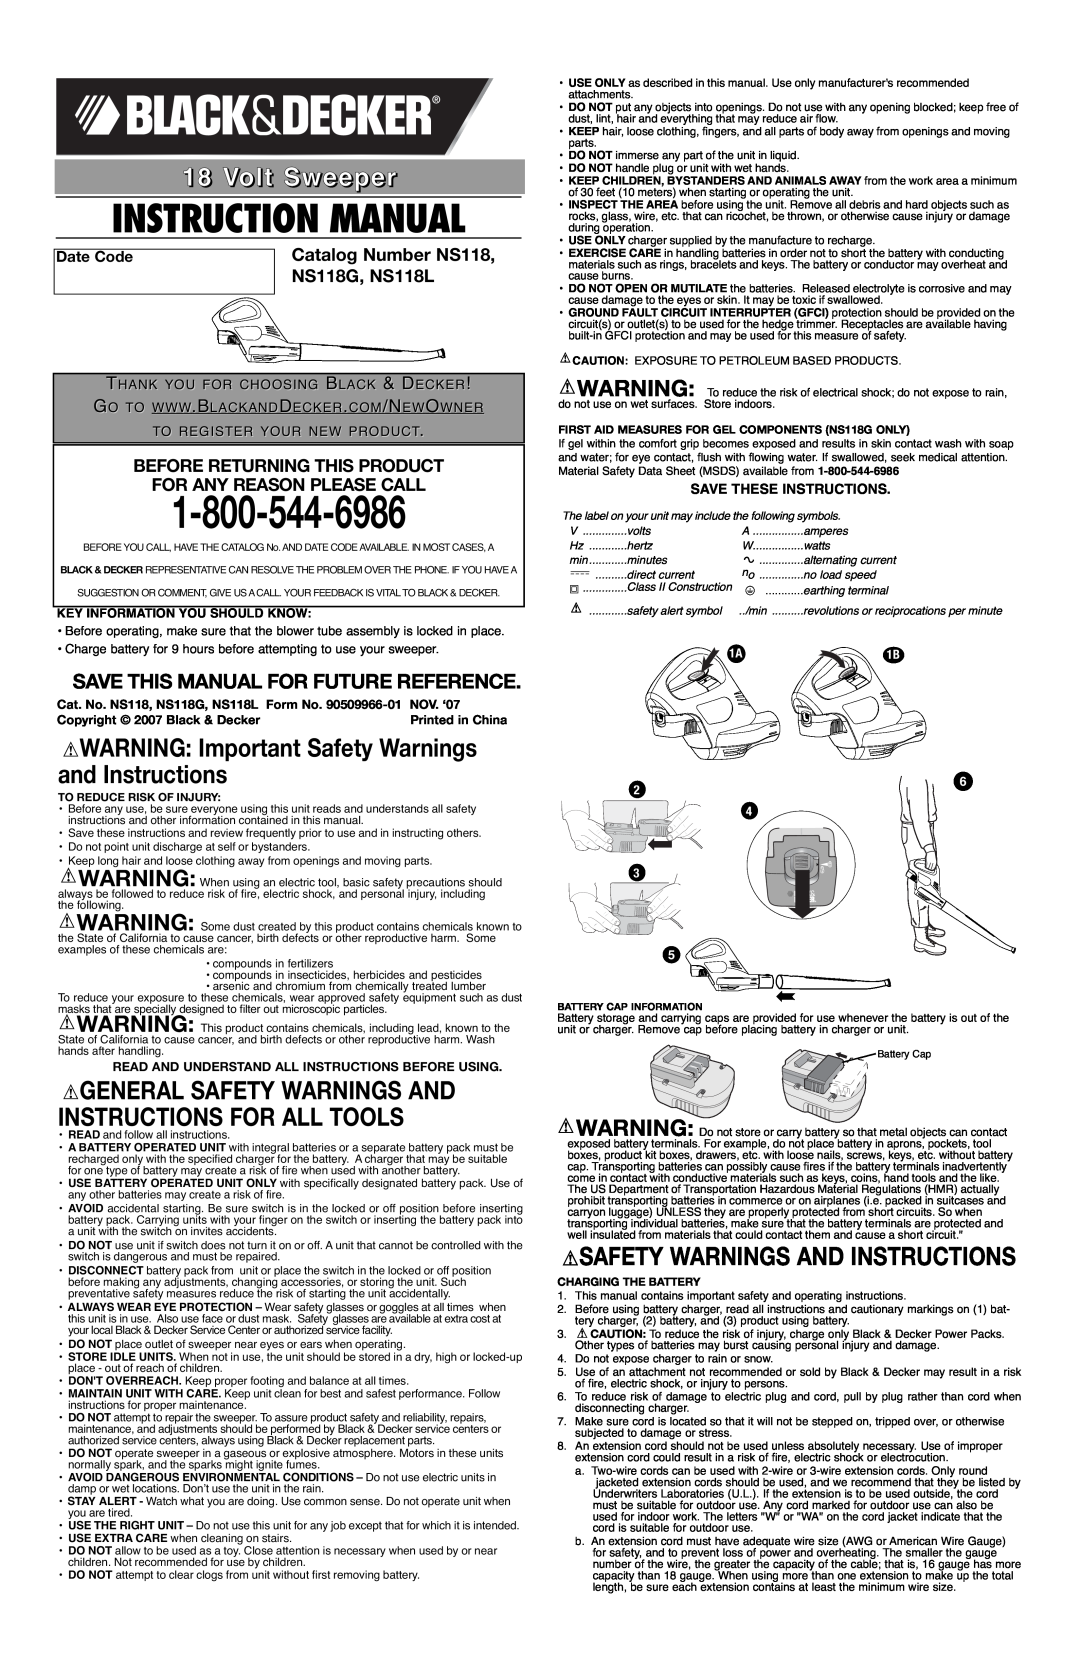 Black & Decker NS118 instruction manual WARNING Important Safety Warnings and Instructions, Instructions For All Tools 